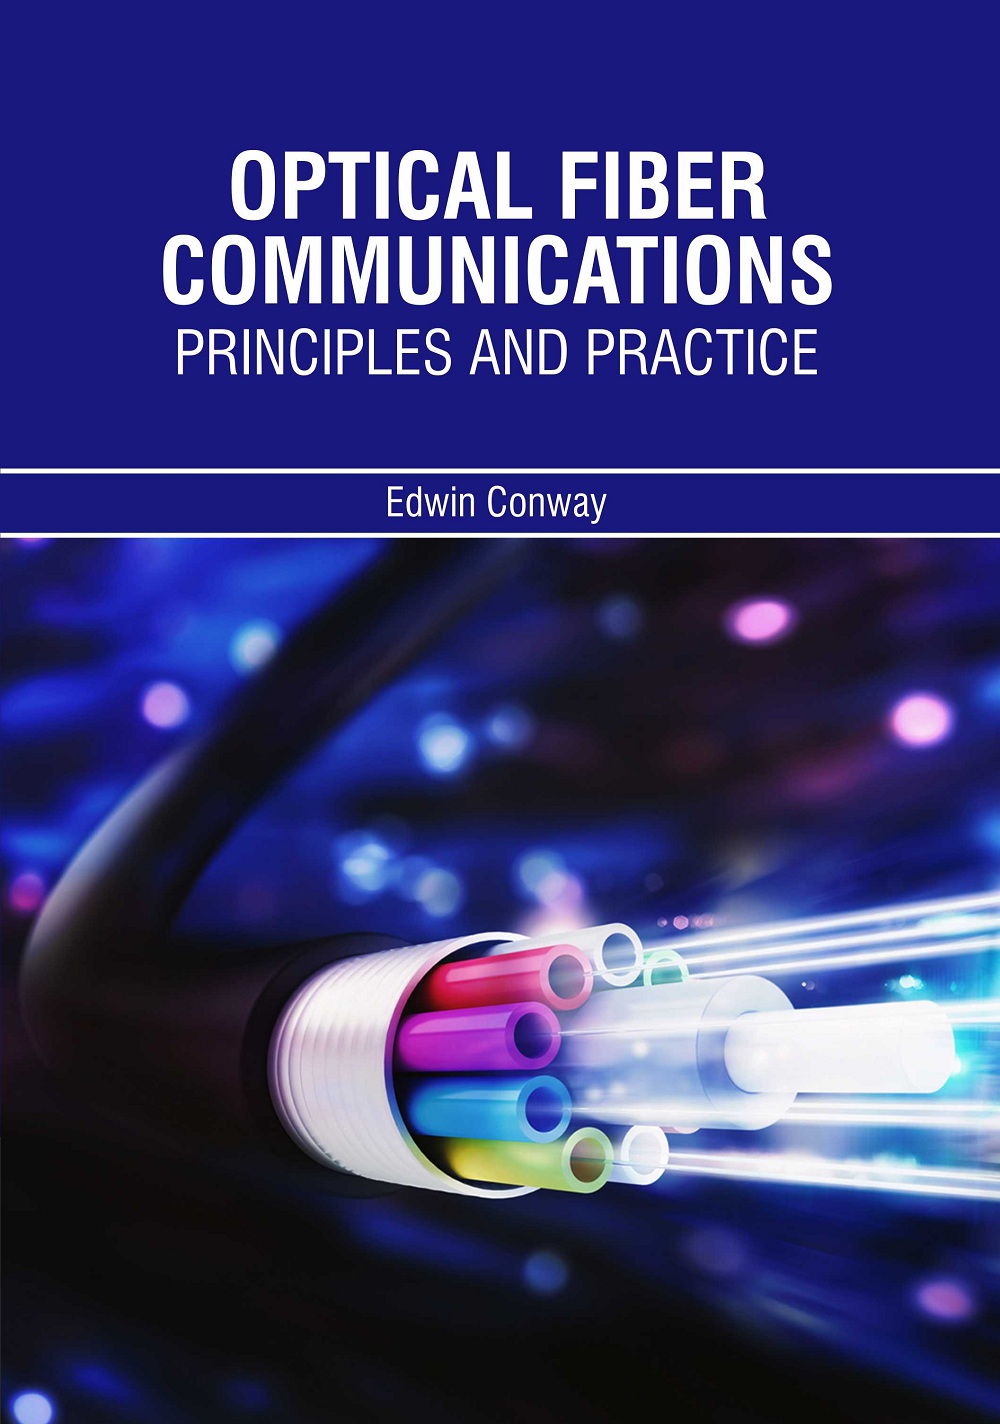 research topics in optical fiber communication